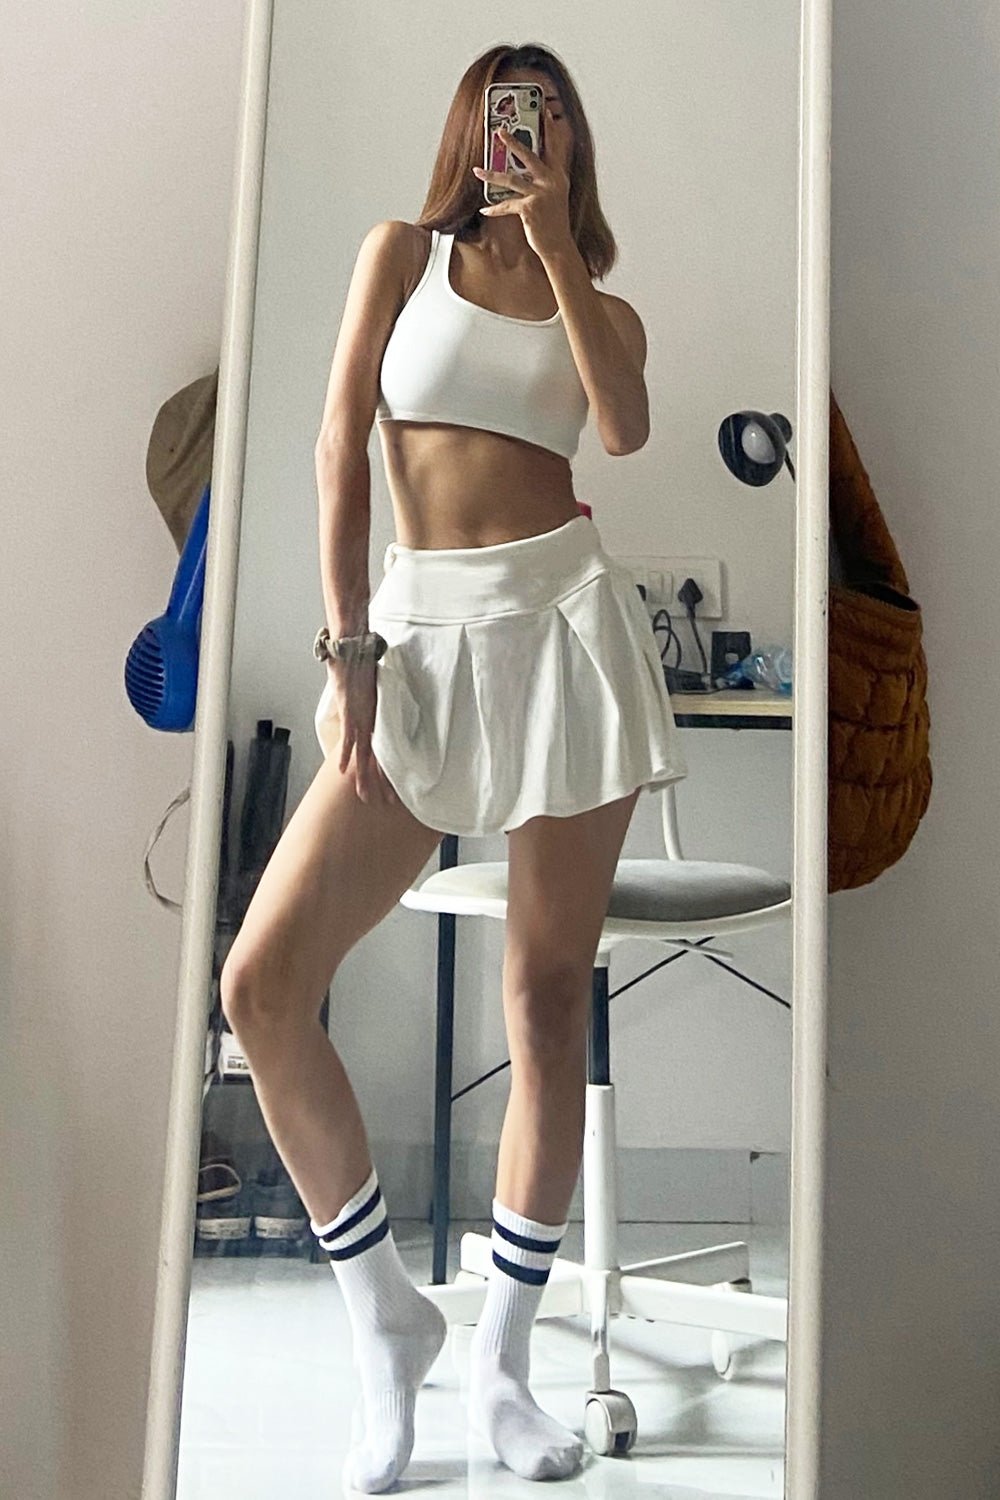 White Tennis Skirt - BEEGLEE